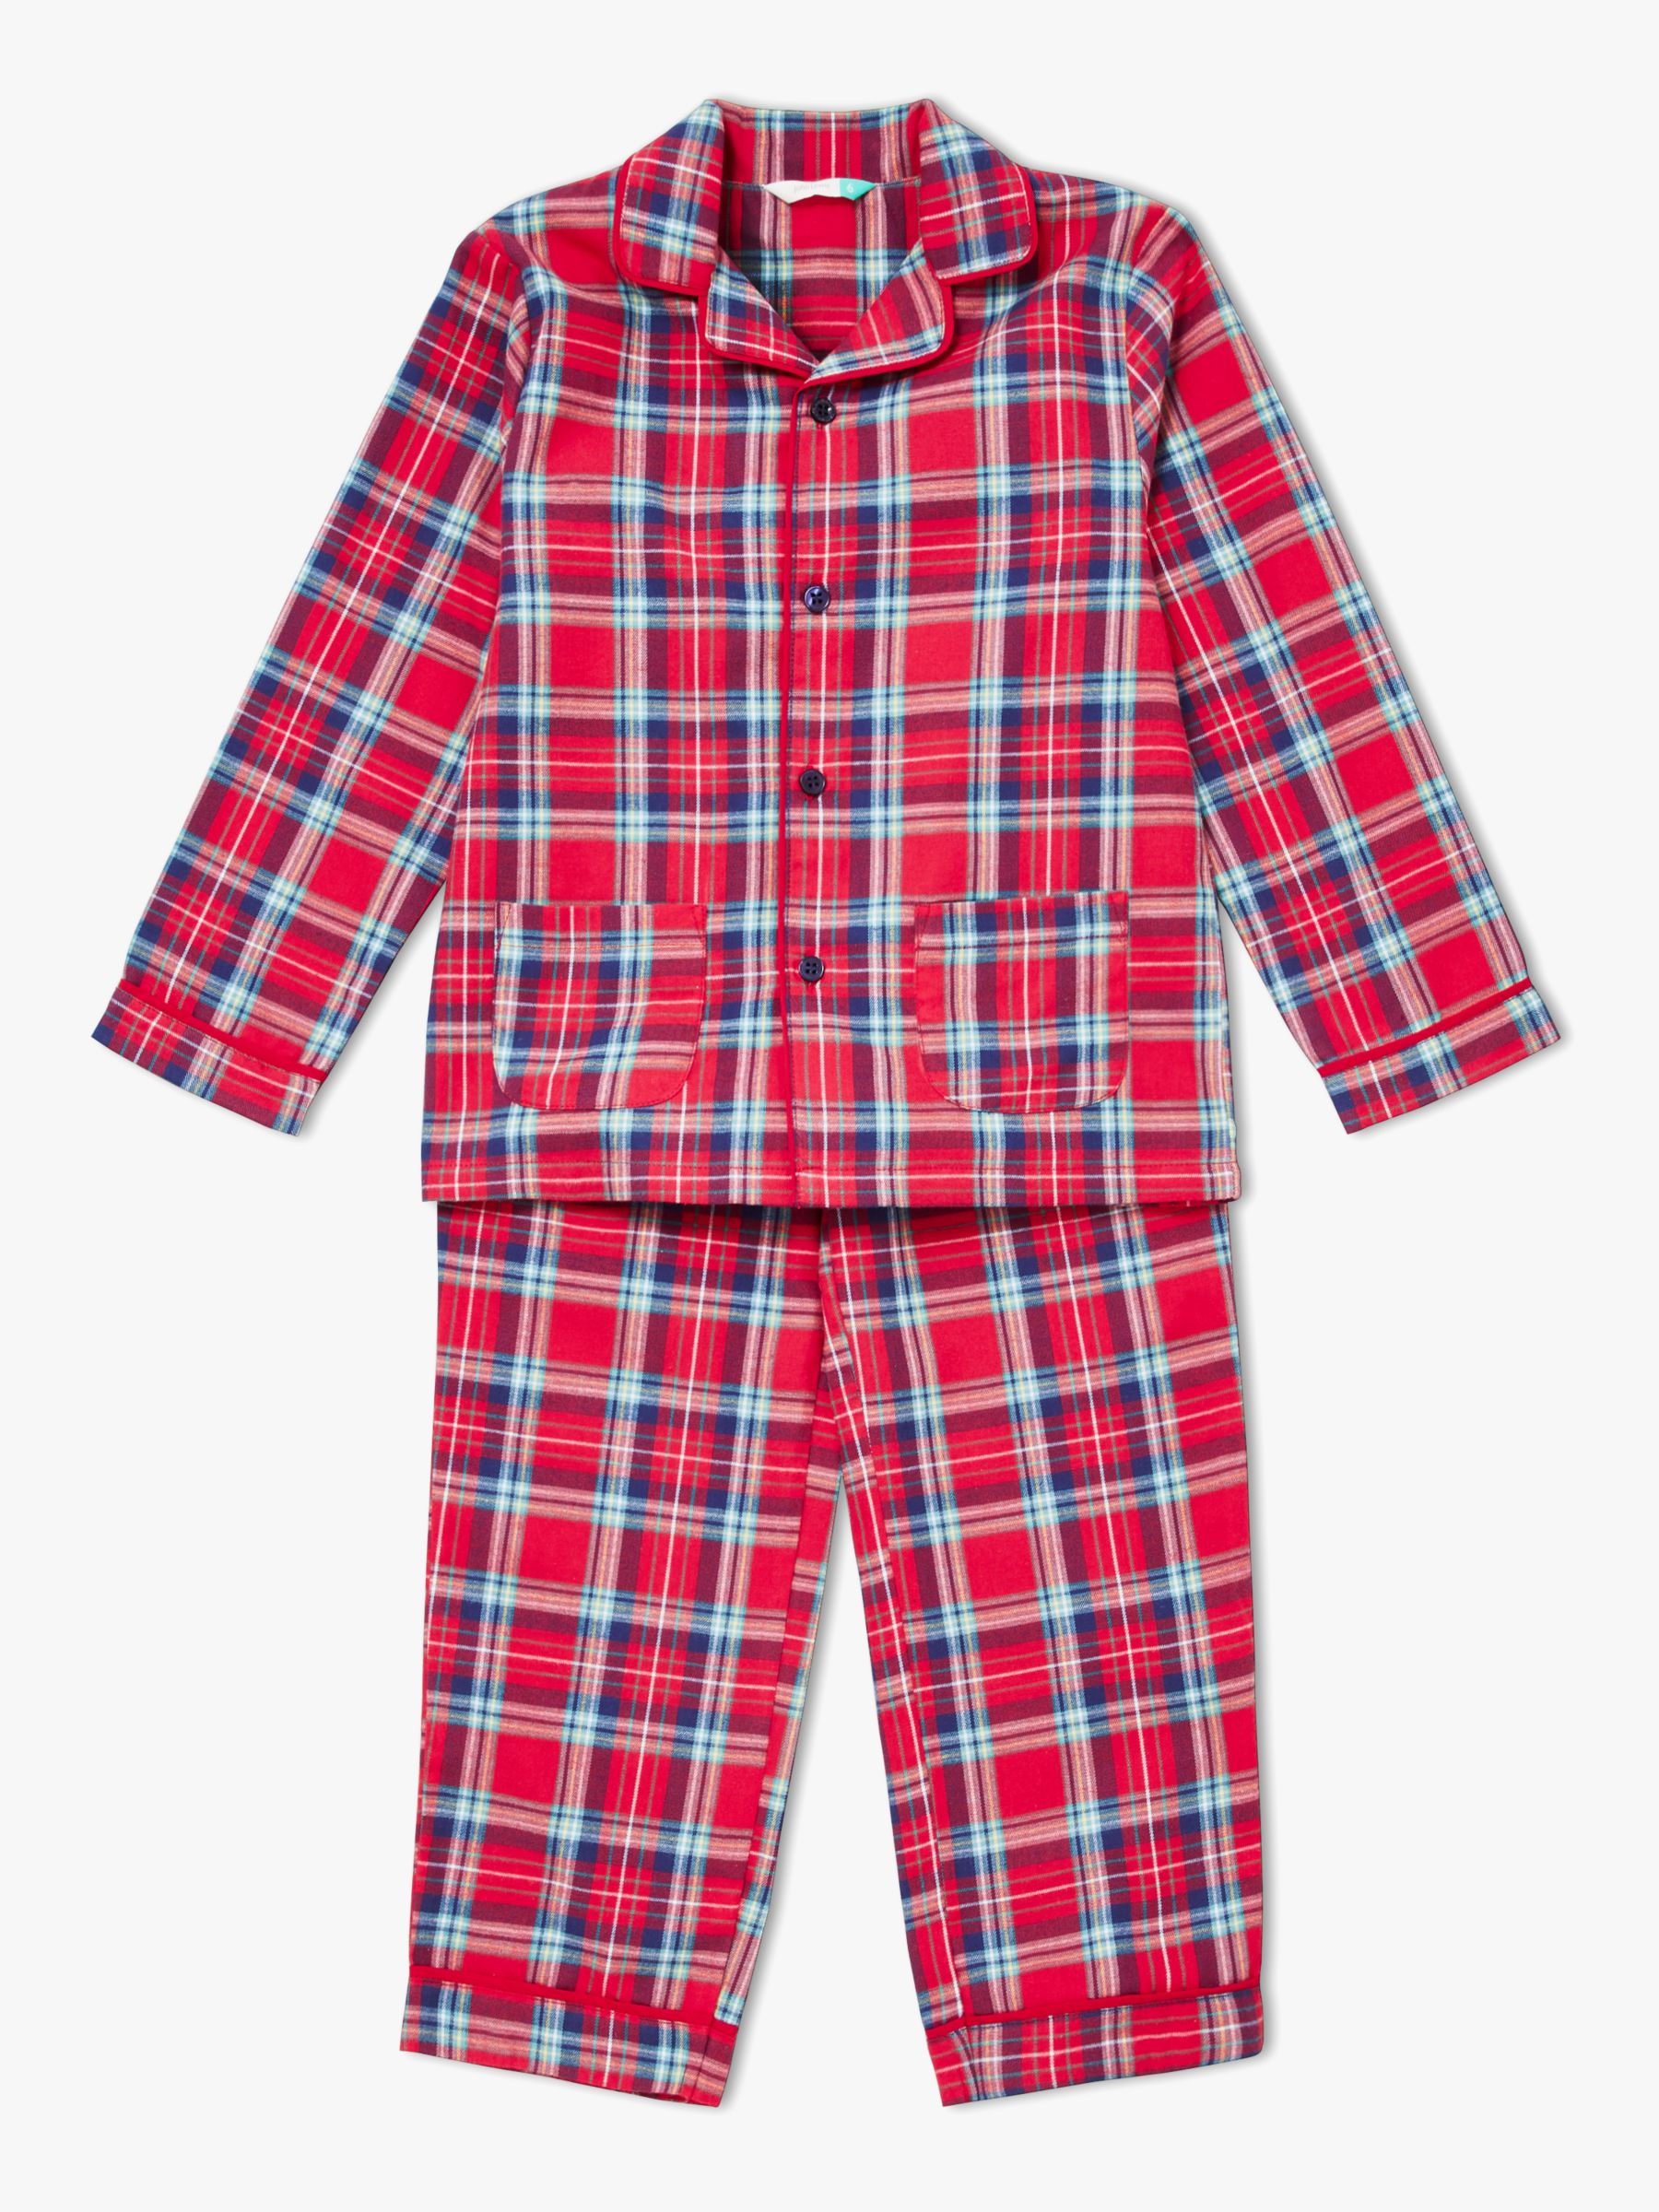 John Lewis & Partners Children's Christmas Plaid Pyjamas, Red, 12 years